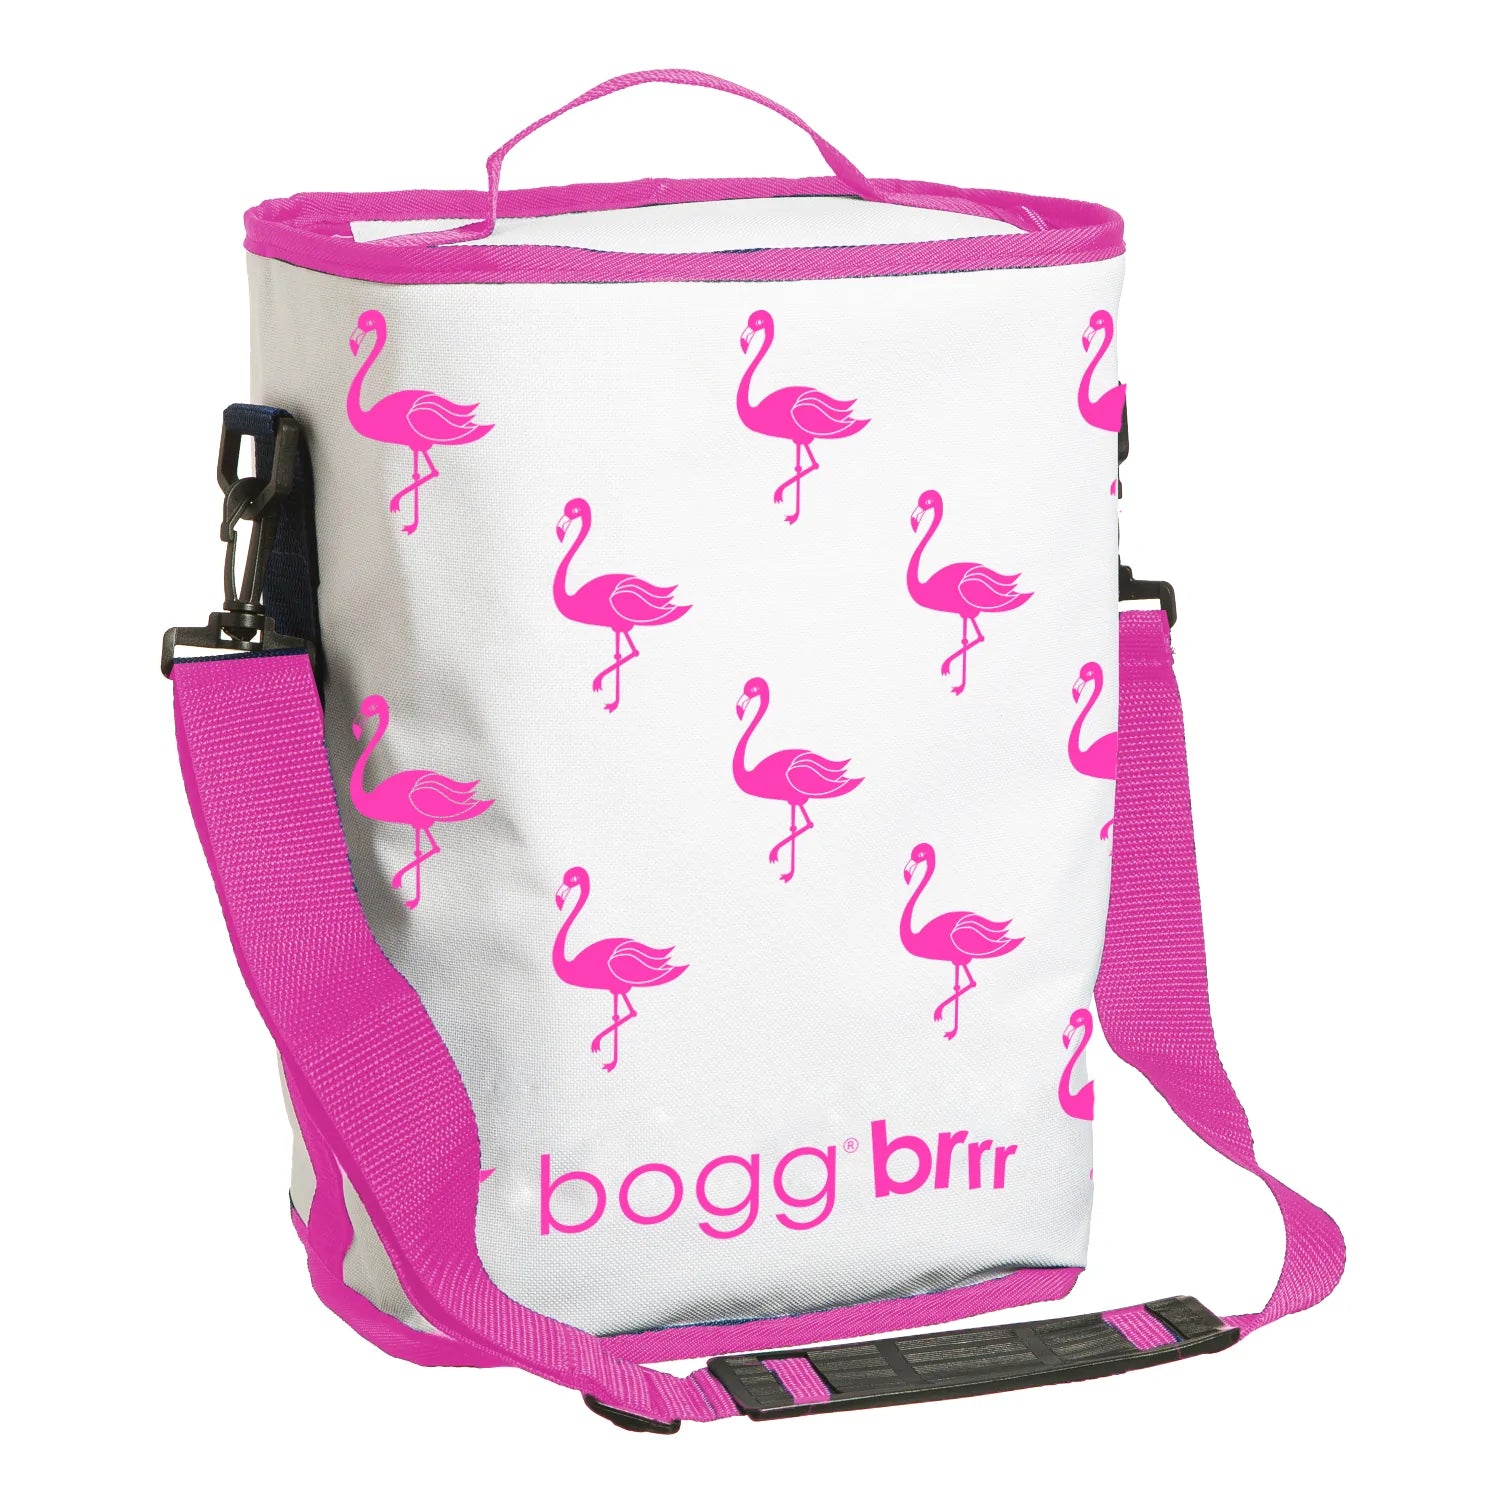 Bogg Bag Pouch Insert Set of 2 - Pink Leopard